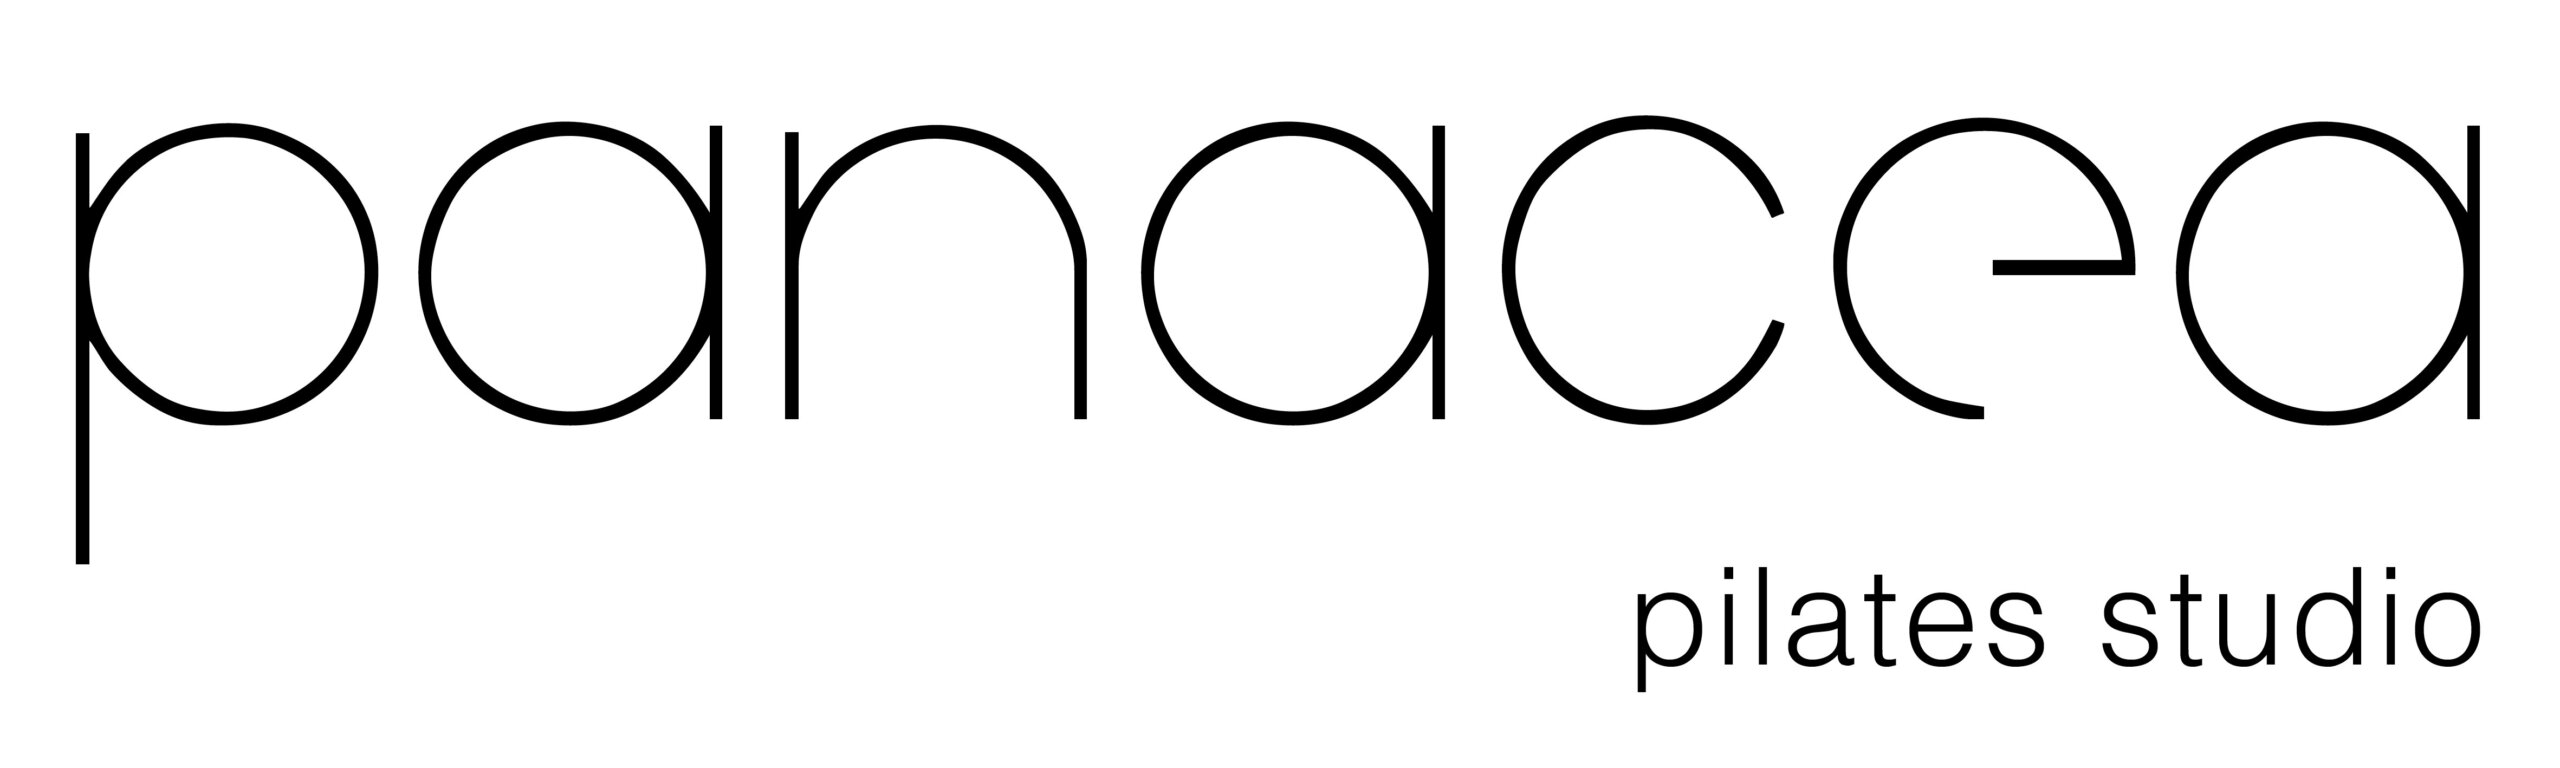 panacea pilates studio logo image